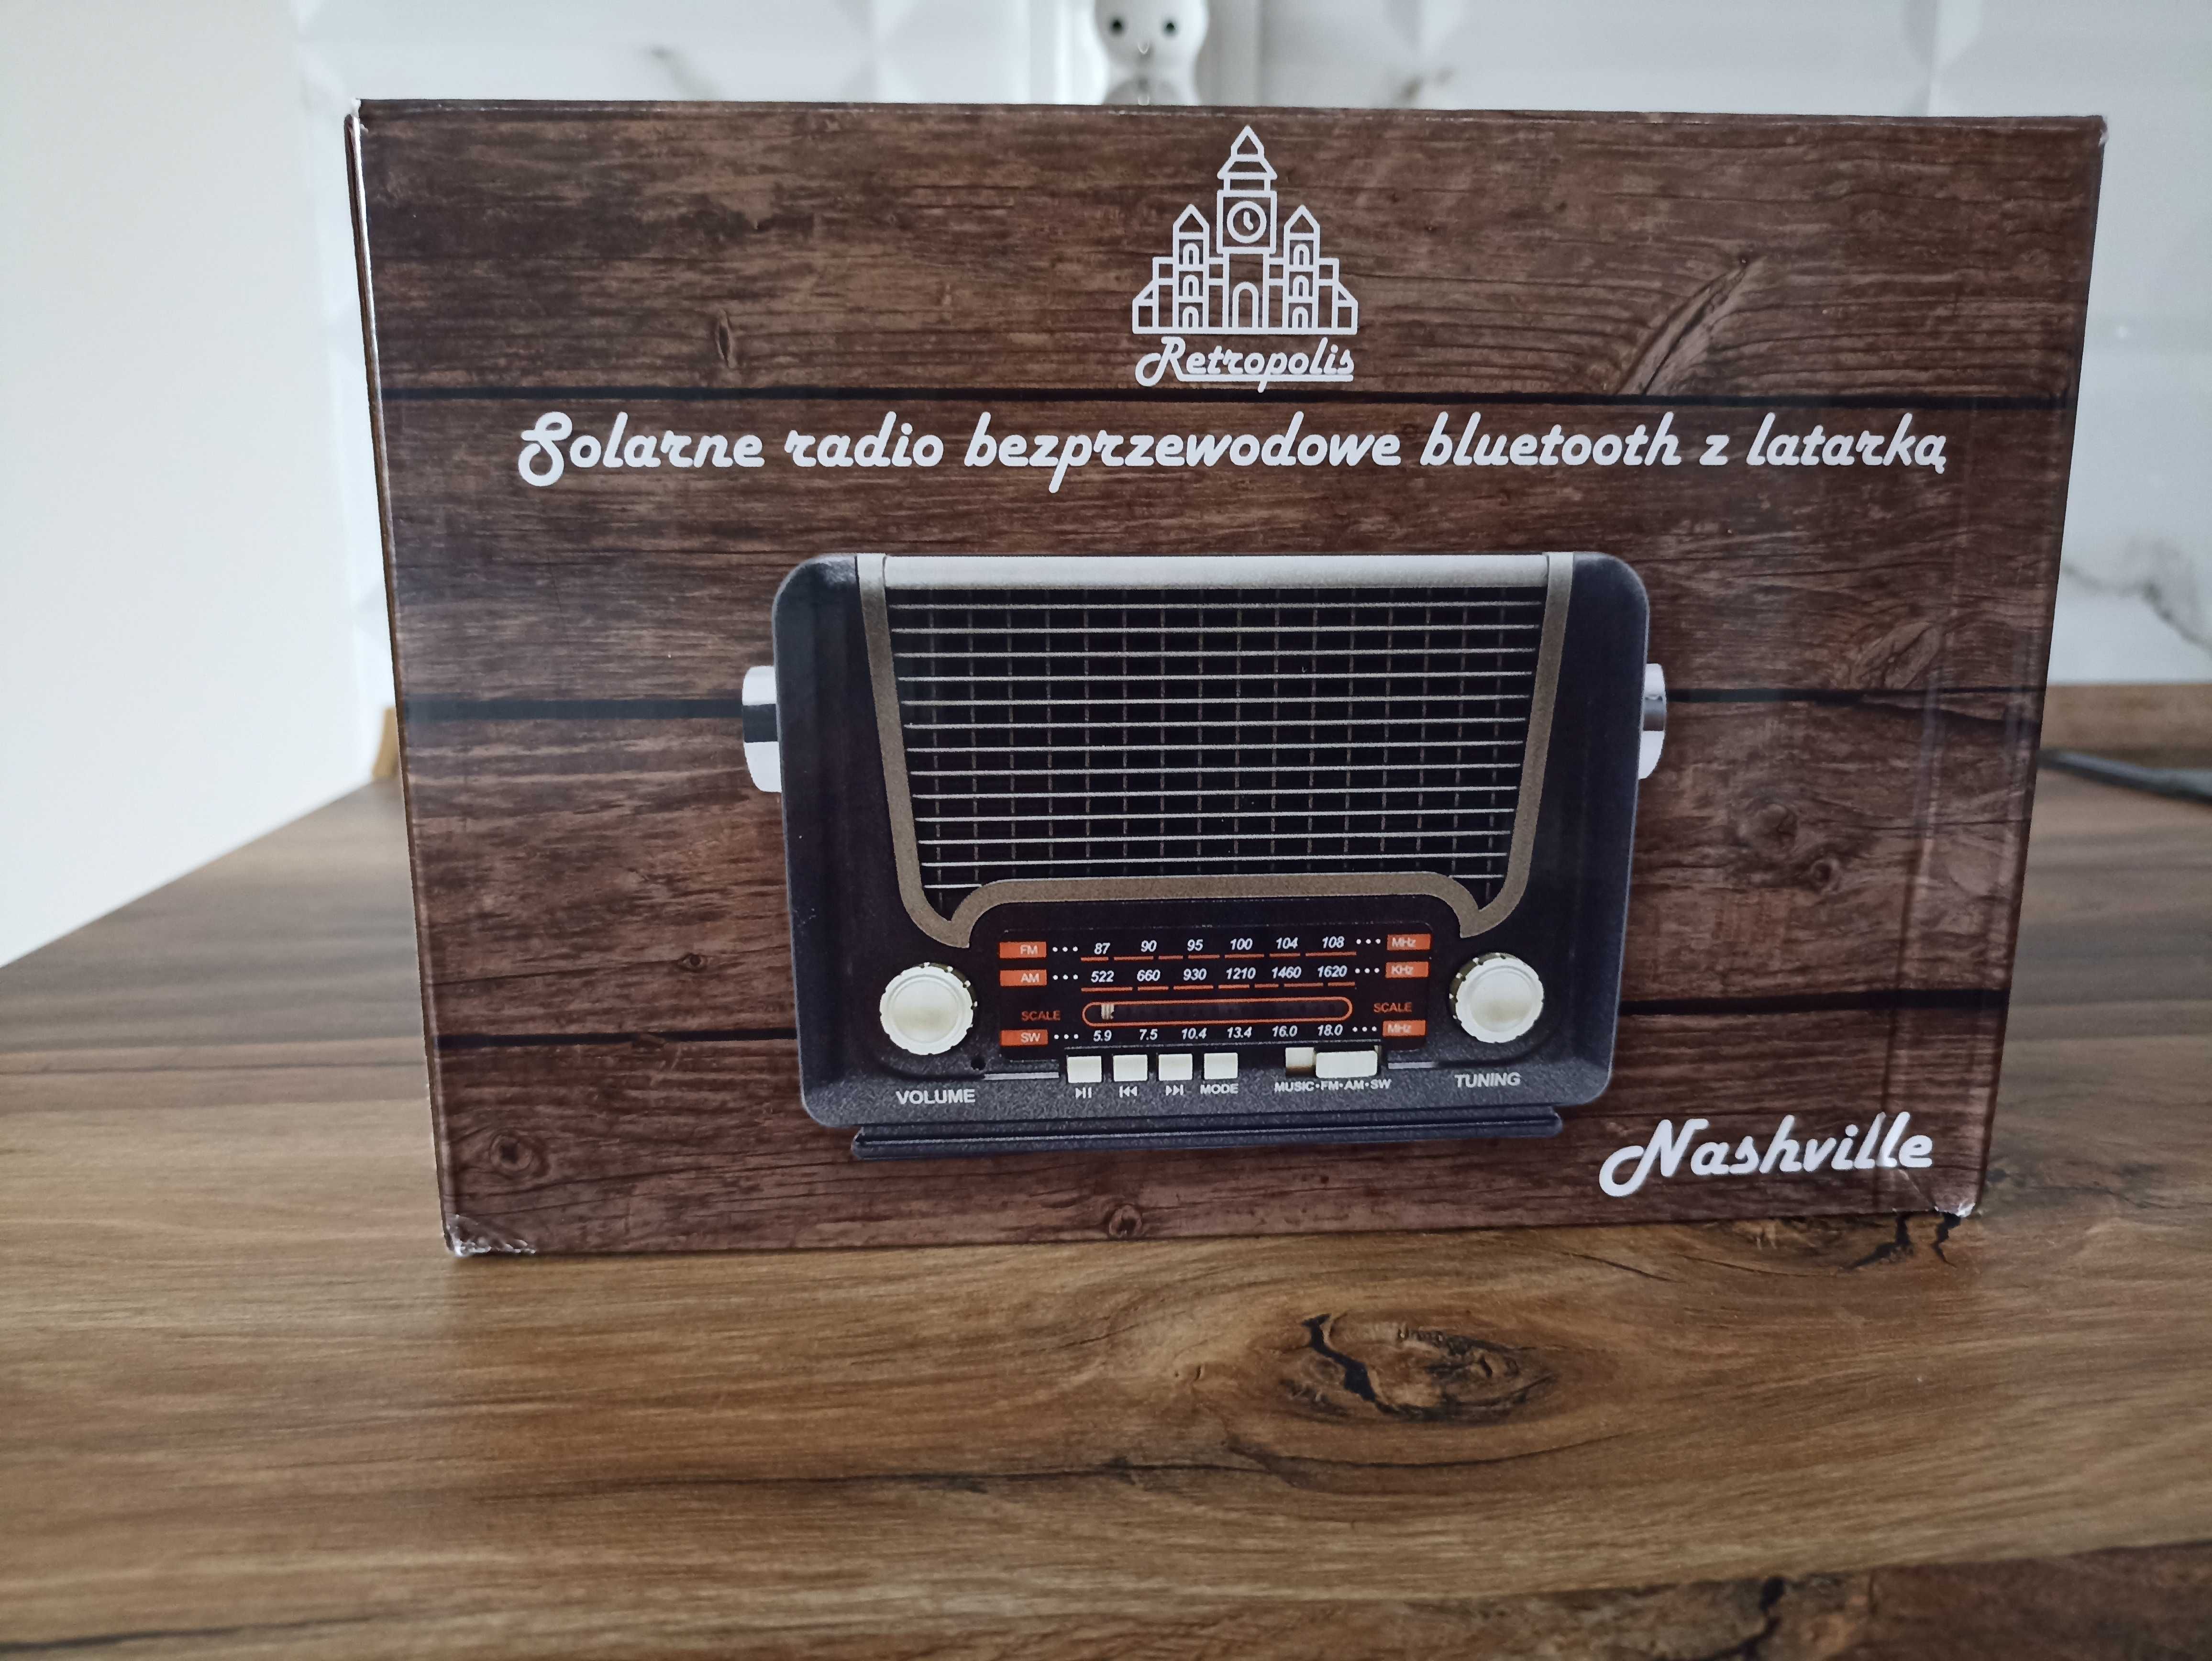 Radio NOWE sieciowo-bateryjne AM, FM Retropolis